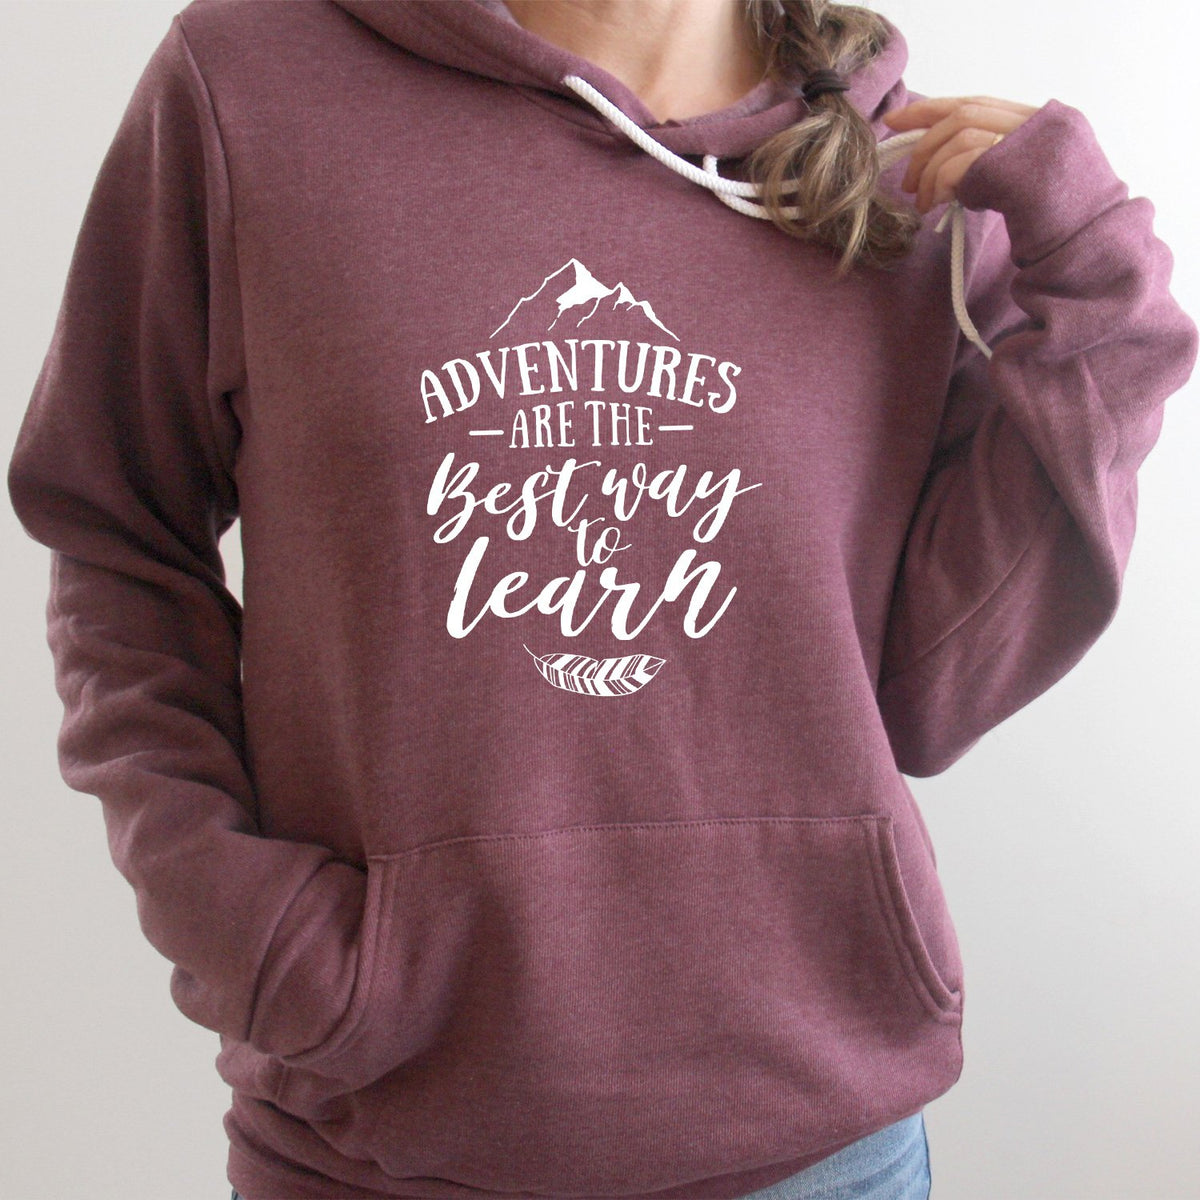 Adventures Are The Best Way to Learn - Hoodie Sweatshirt